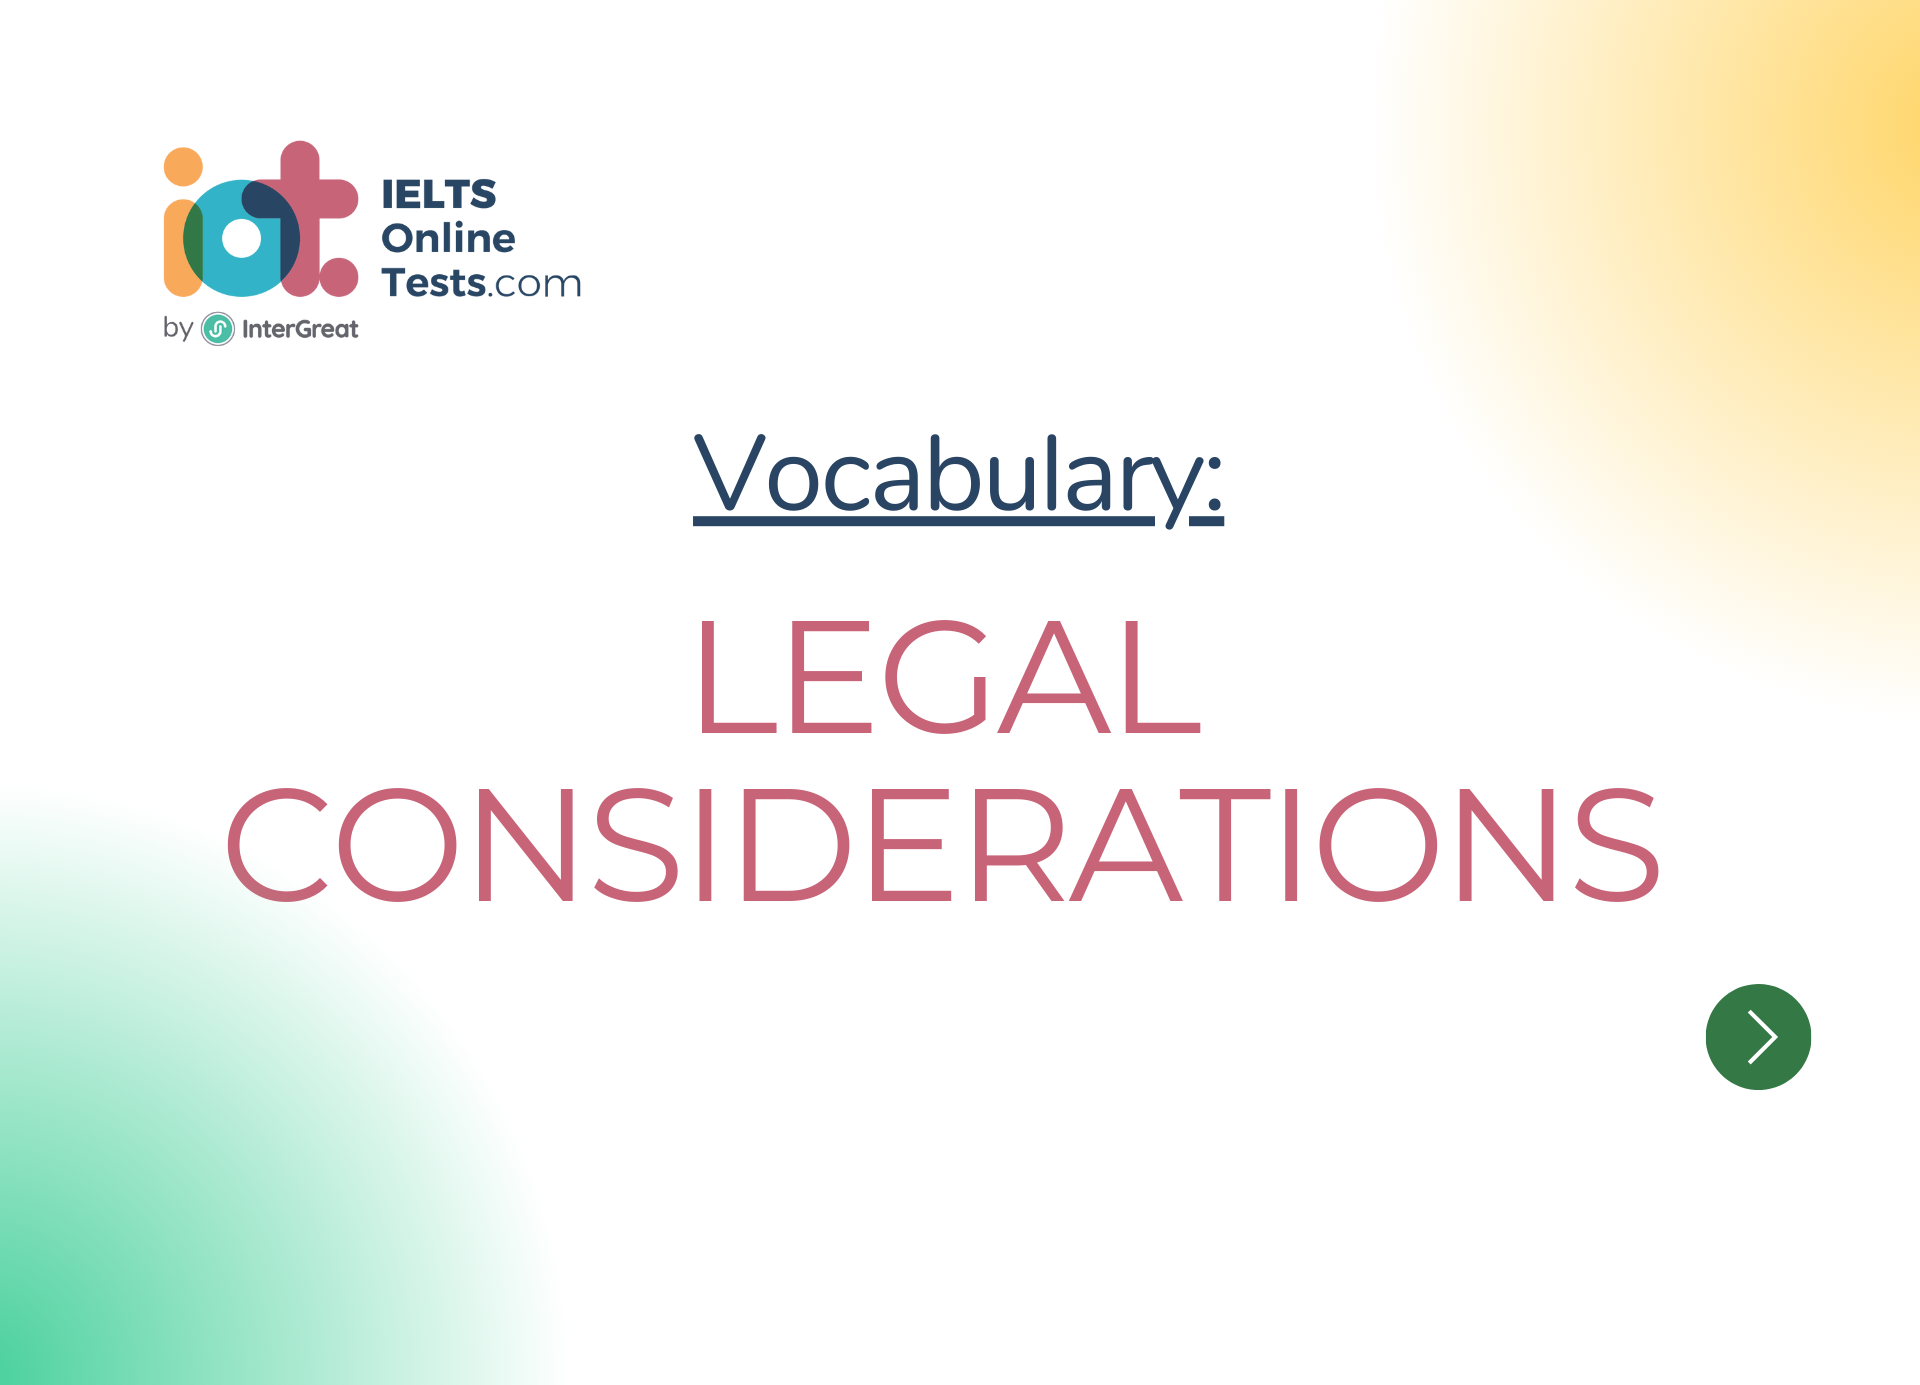 Legal considerations